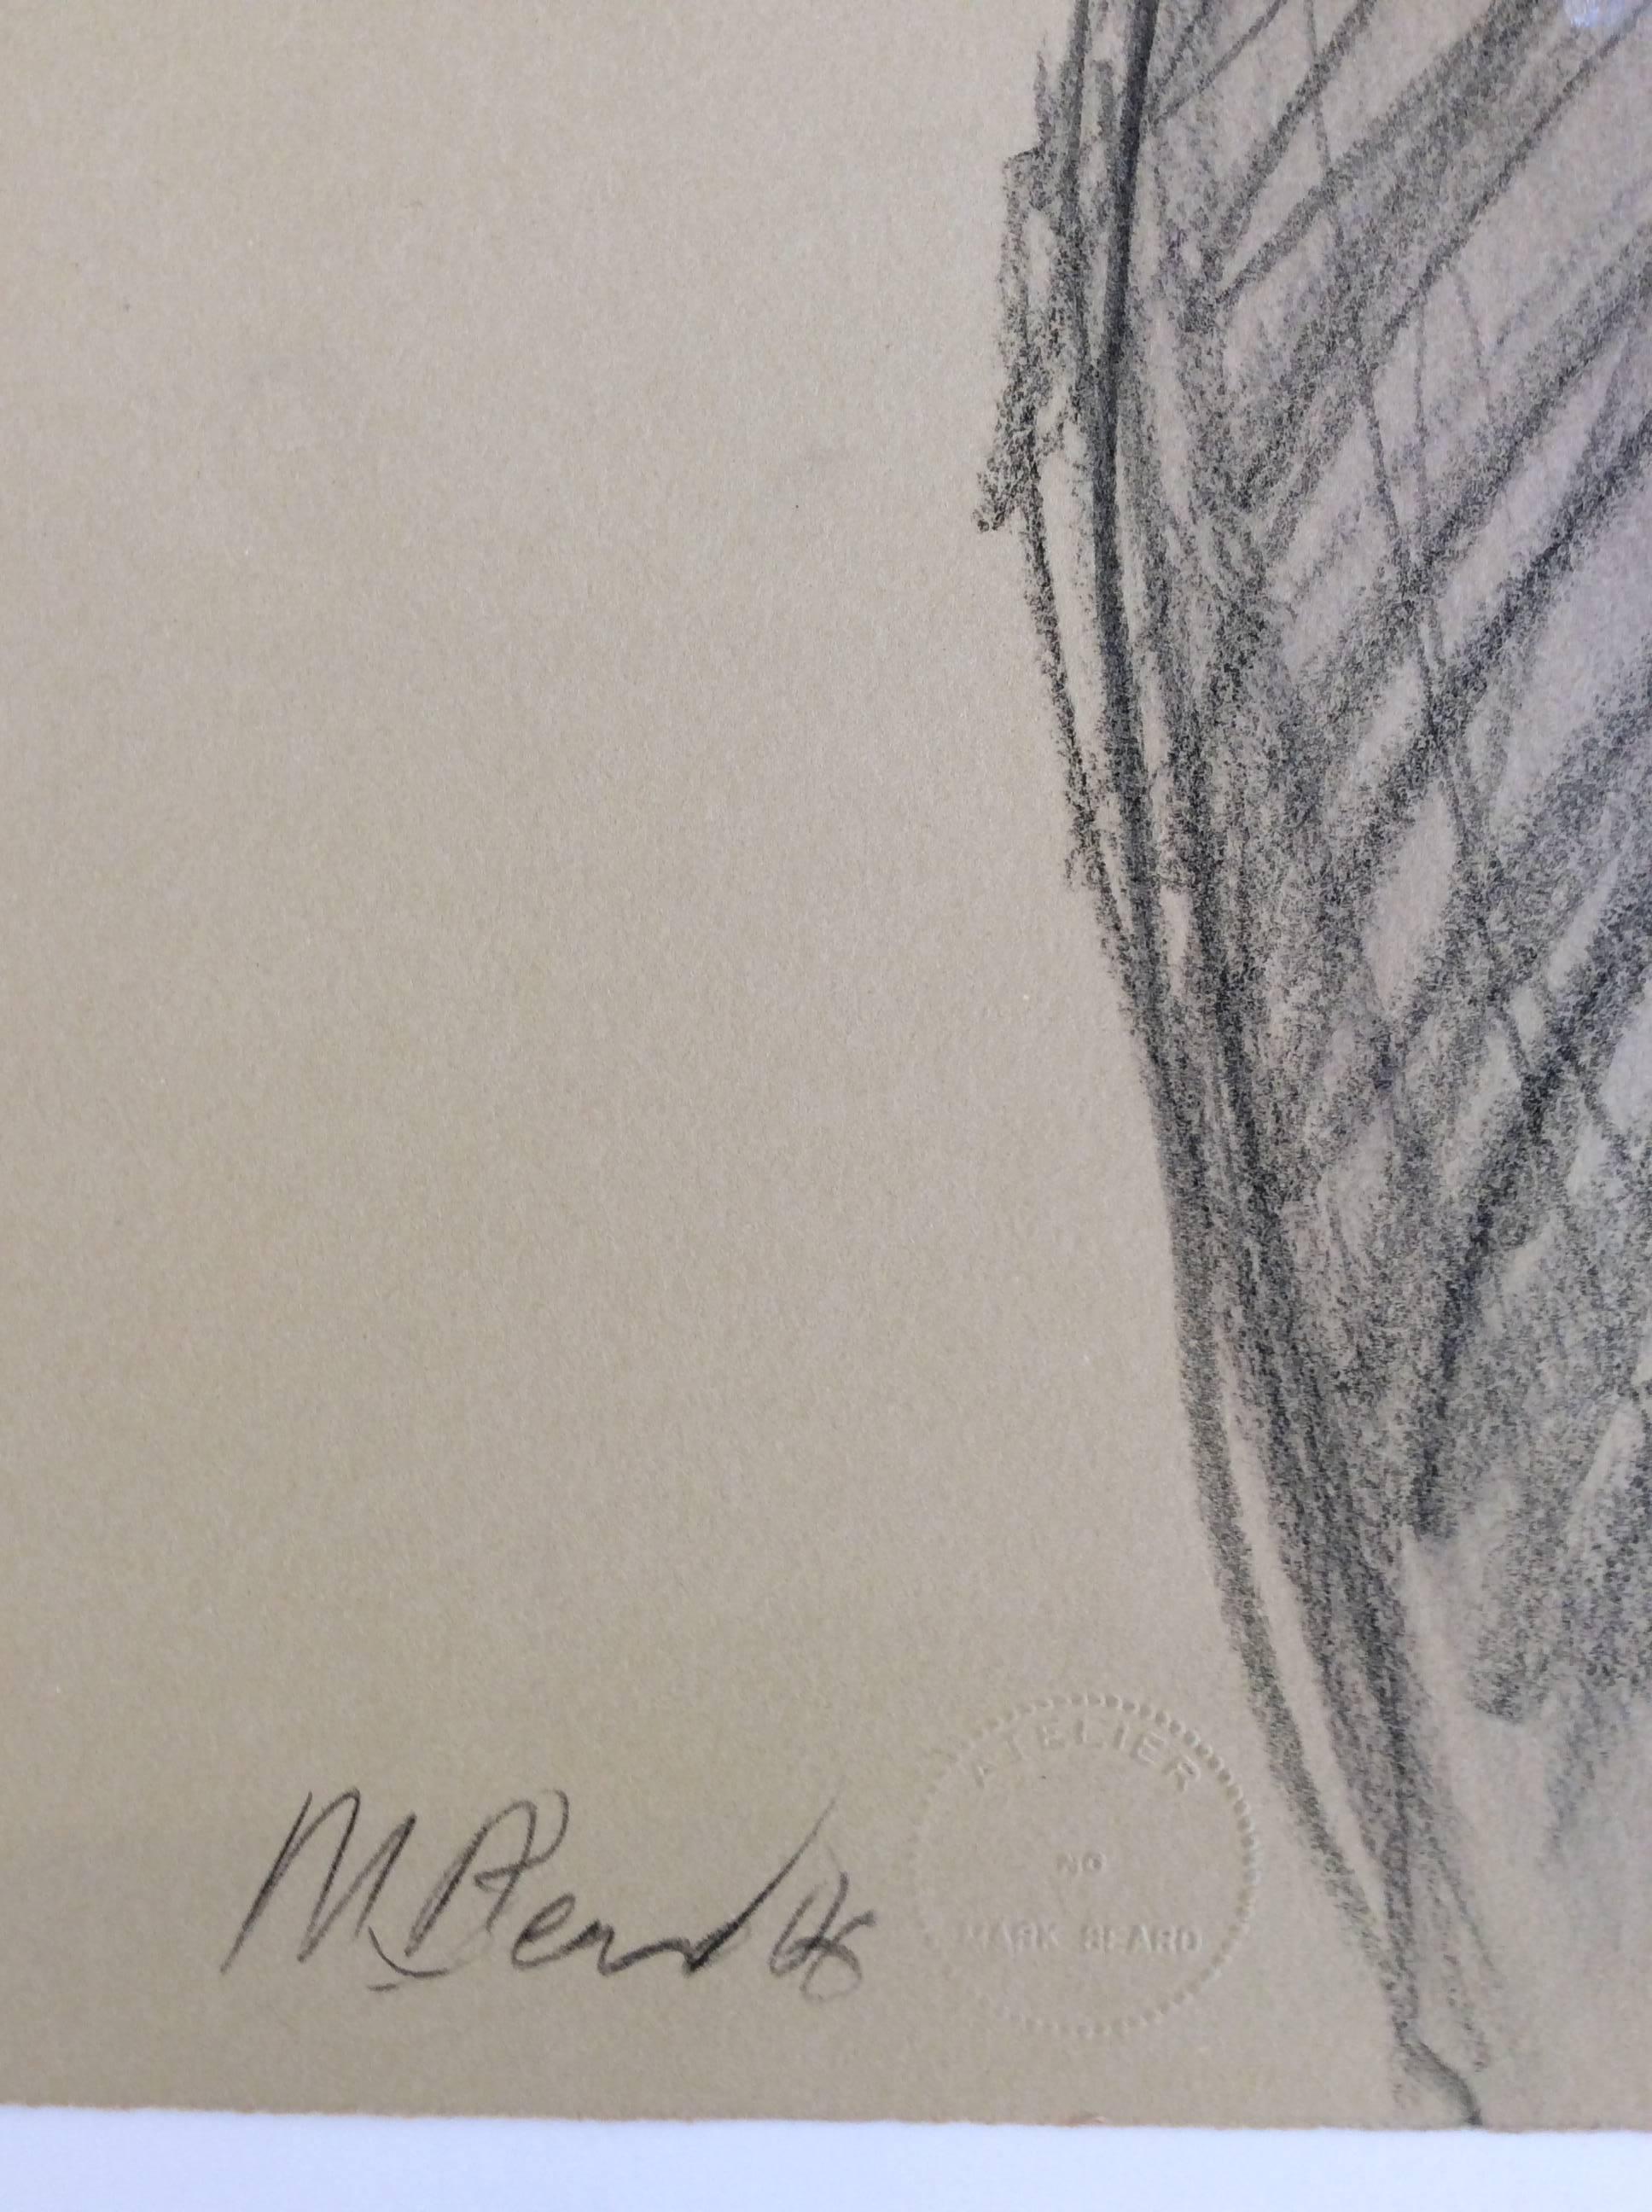 Motif figuratif masculin contemporain d'un nu, fusain sur papier MB 821 A - Moderne Art par Mark Beard